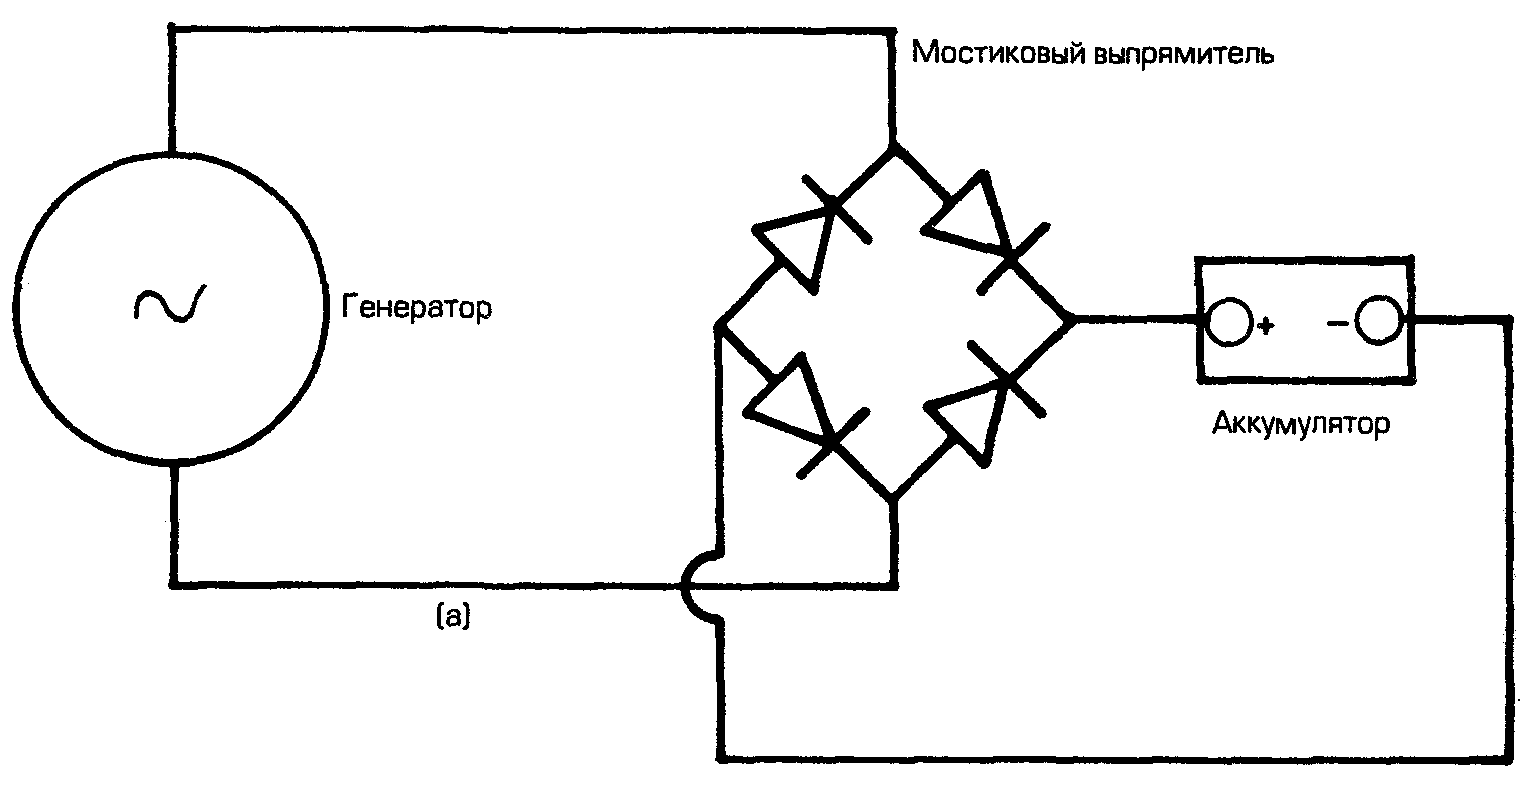 Current rectifier, single bridge circuit